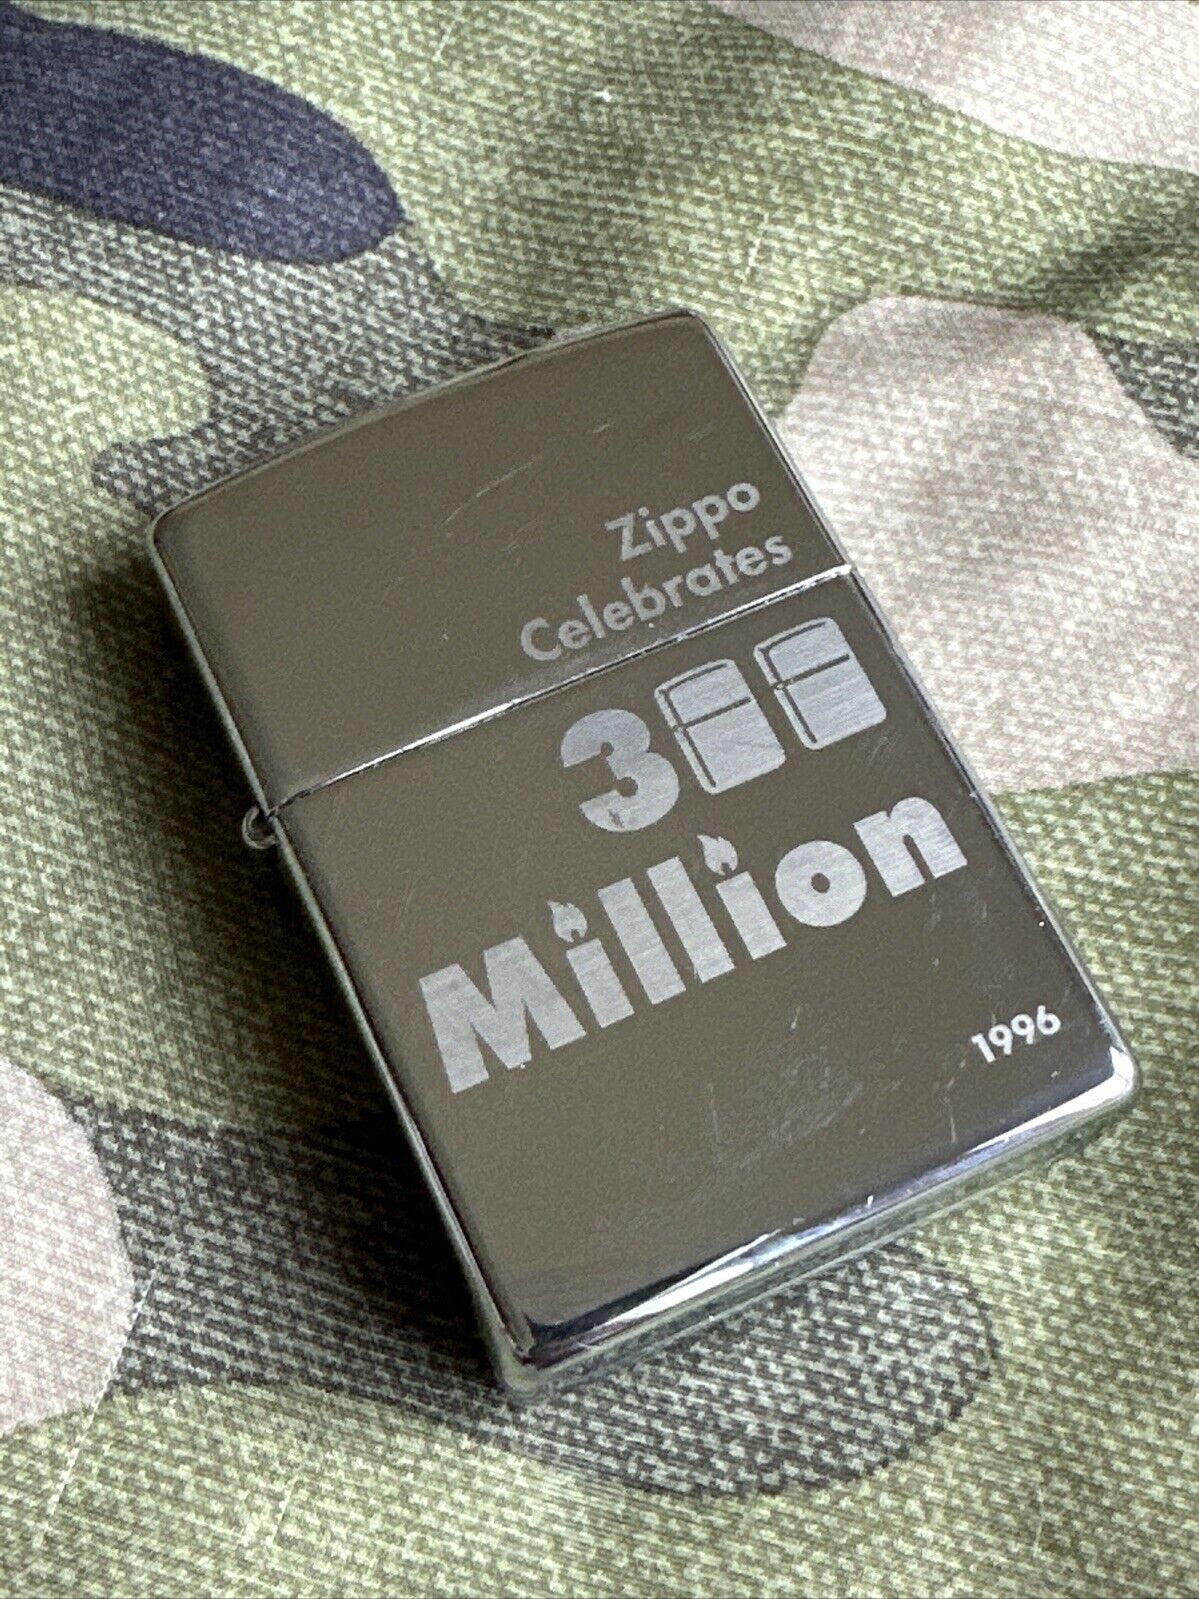 1996 Vintage Zippo Lighter - Zippo Celebrates 300 Million